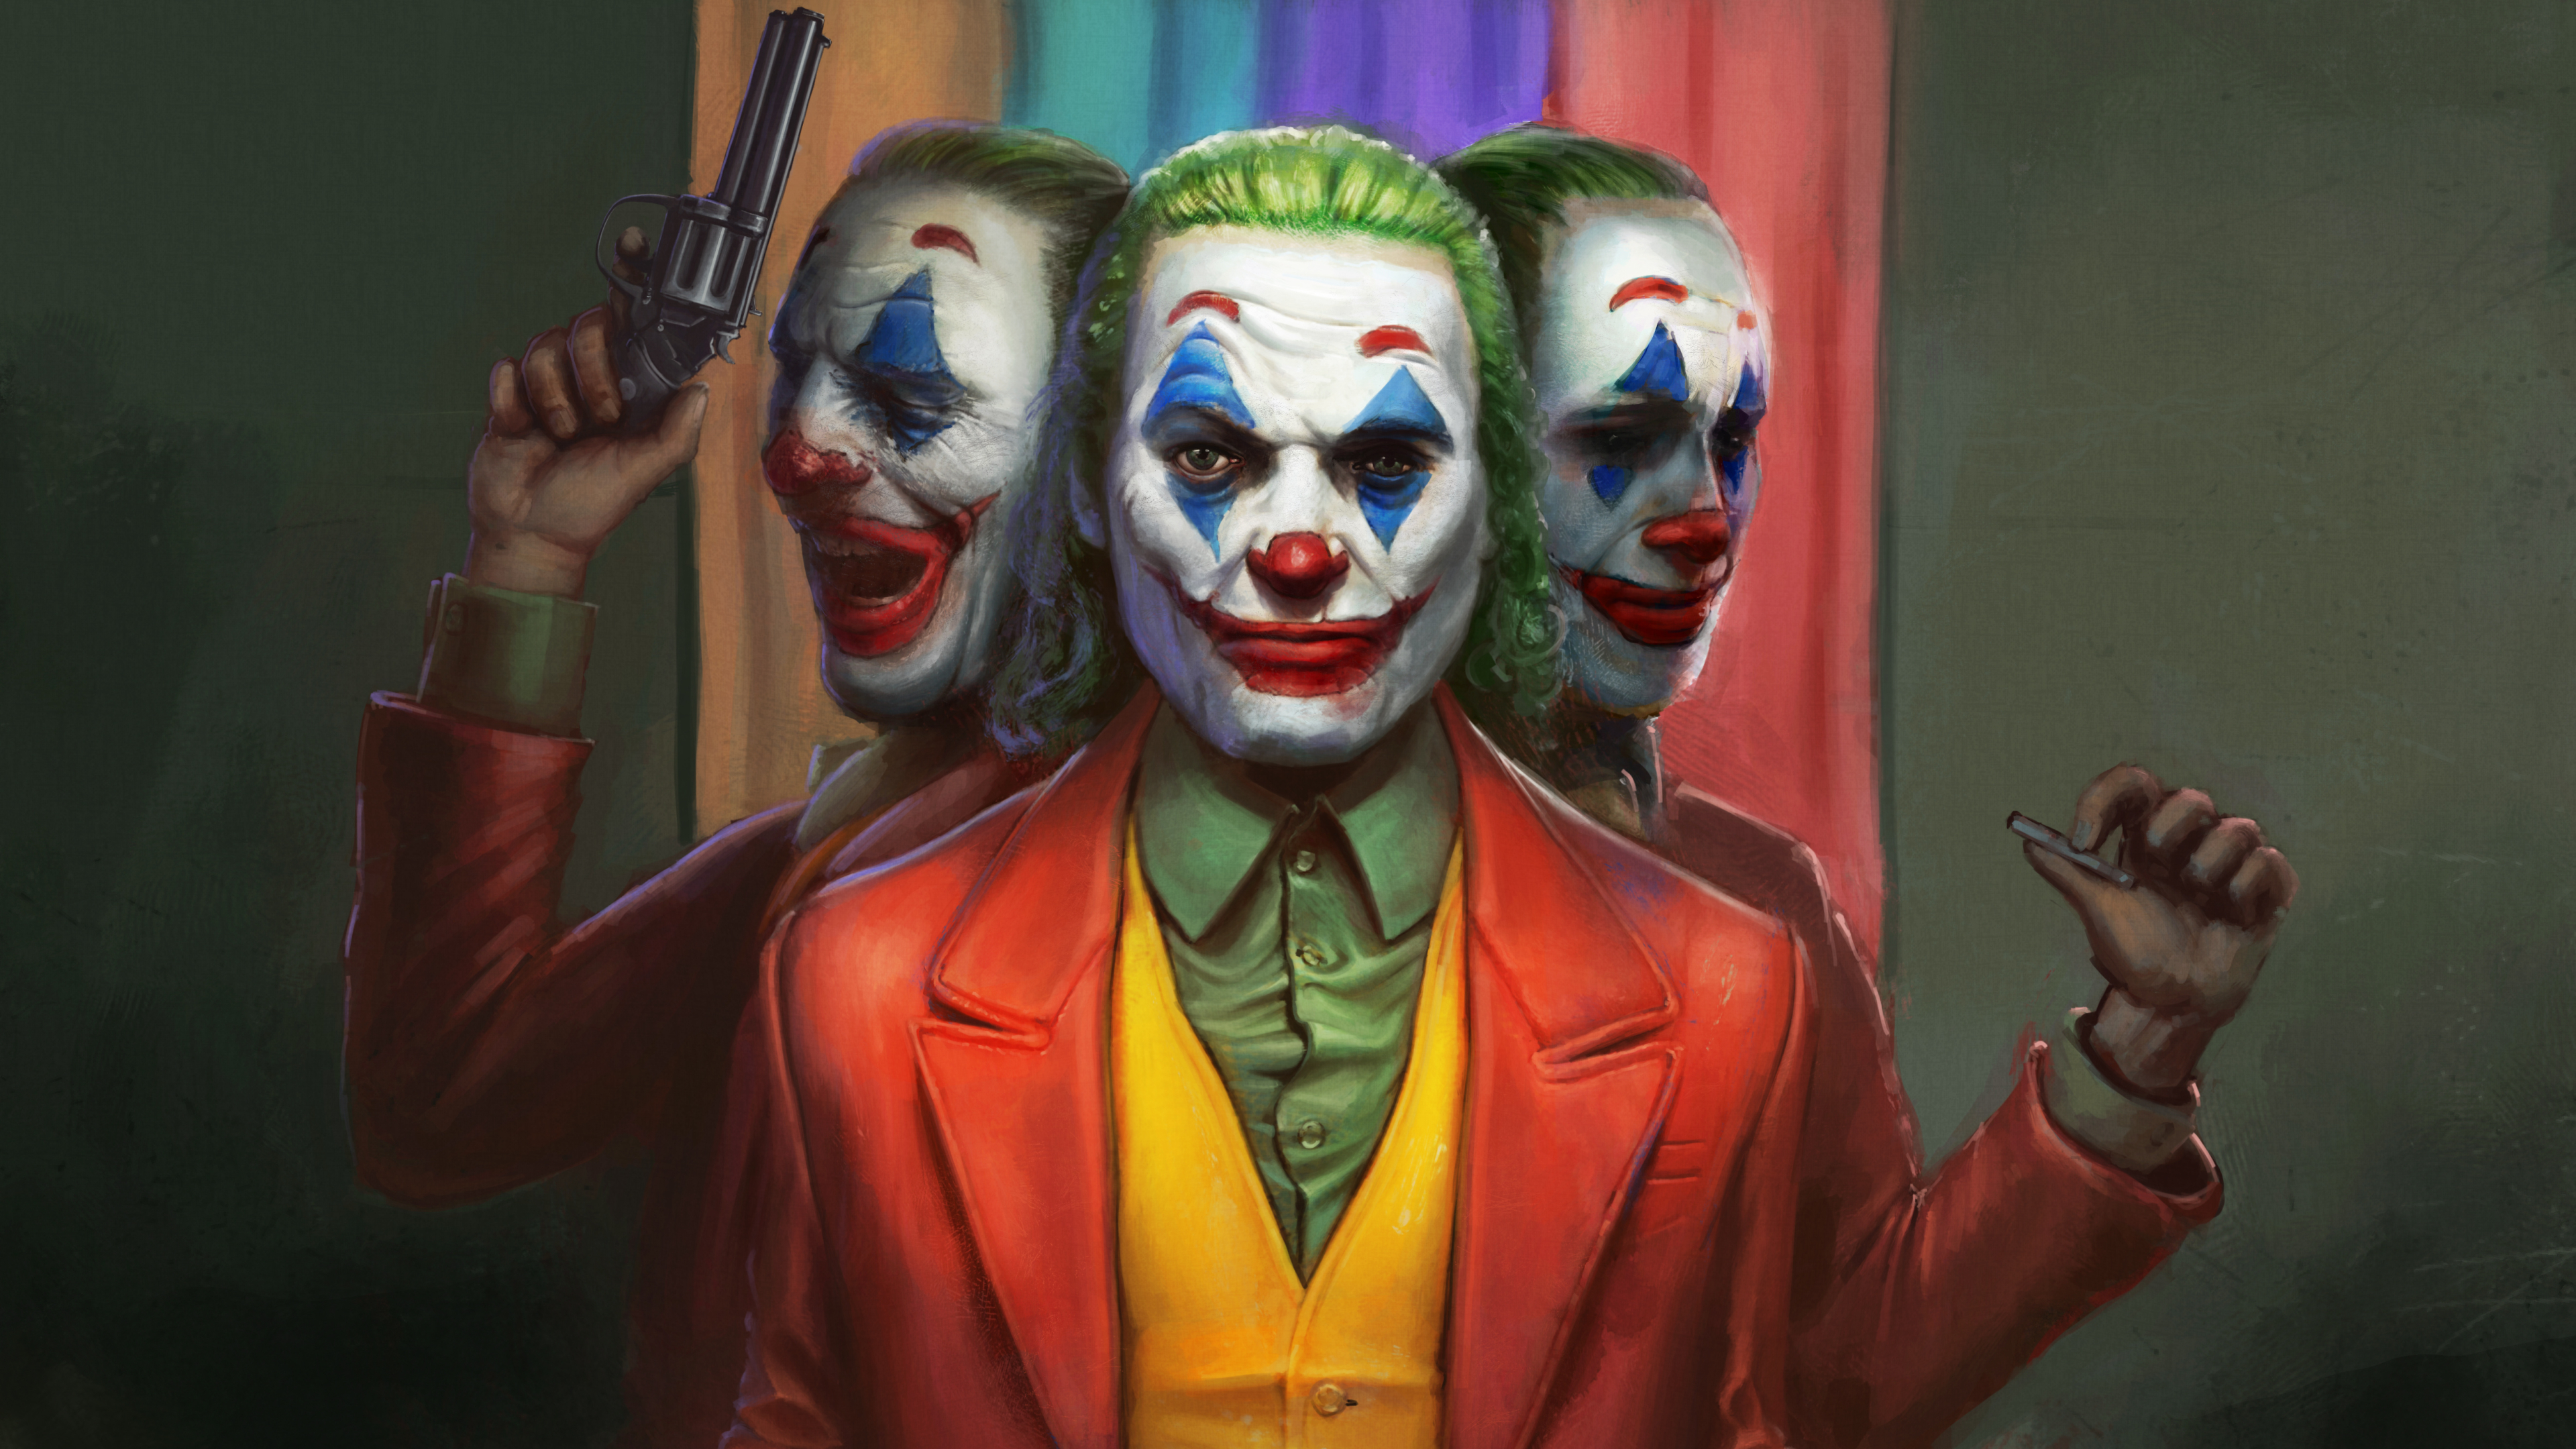 Download 3840x2160 Joker Faces 5k 4k Wallpaper Hd Superheroes 4k Wallpapers Images Photos And Background Wallpapers Den